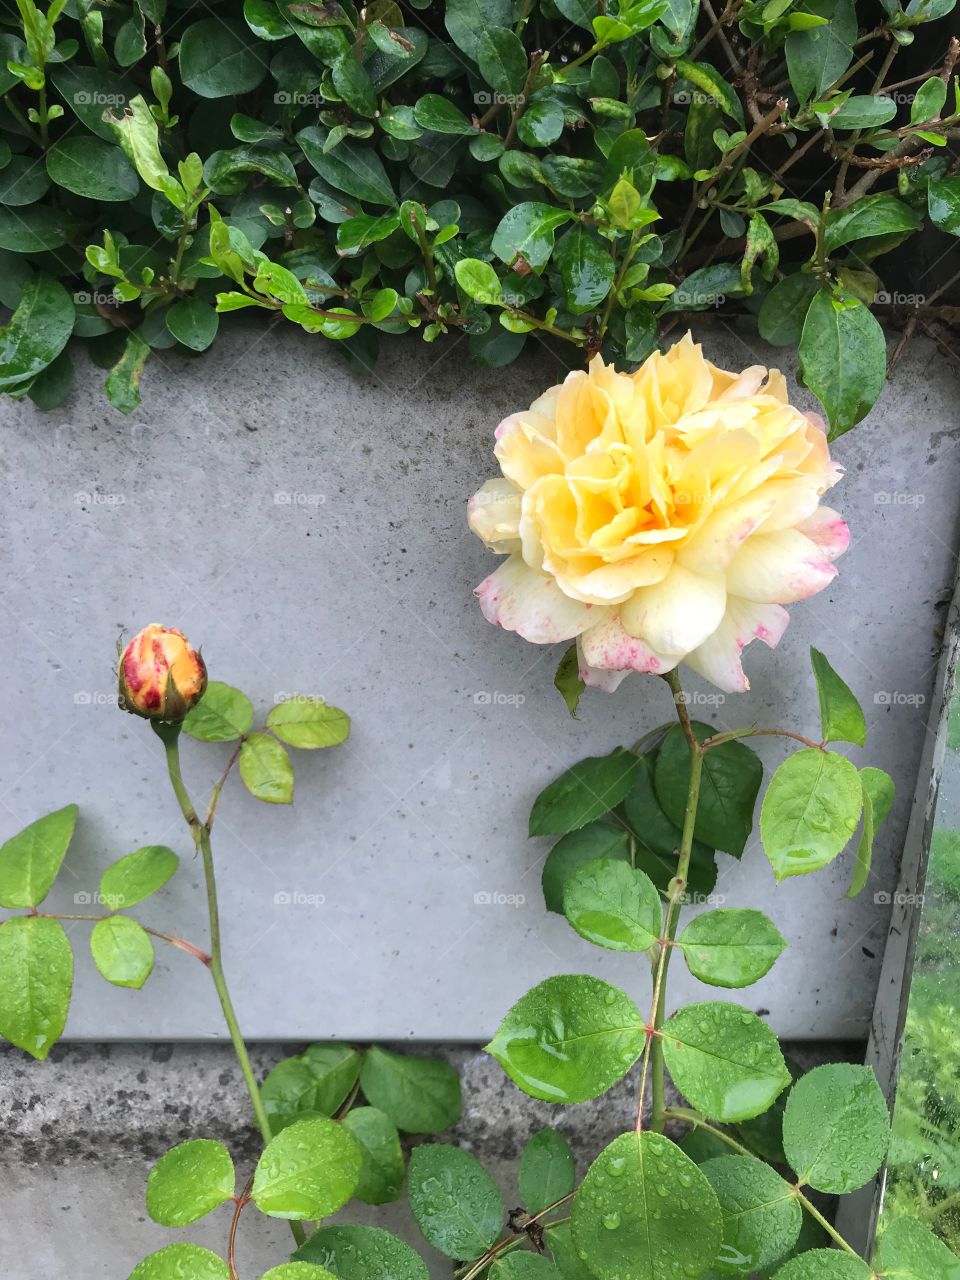 Roses on a rainy morning